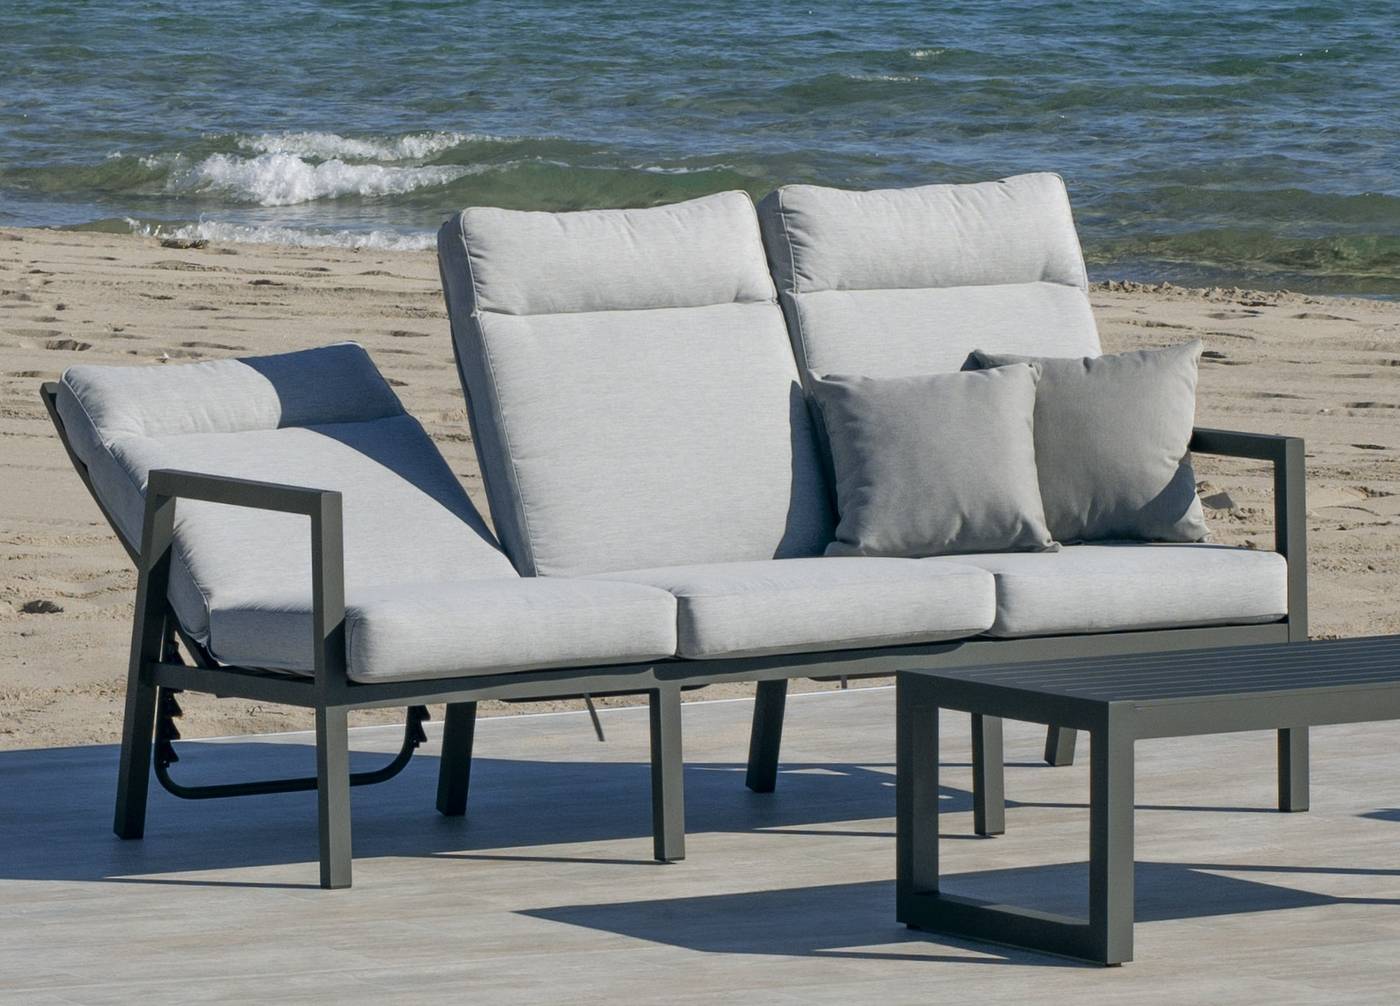 Set Aluminio Voriam-10 - Conjunto aluminio: sofá 3 plazas + 2 sillones + mesa de centro + 2 taburetes. Respaldos reclinables. Colores: blanco, antracita, champagne, plata o marrón.